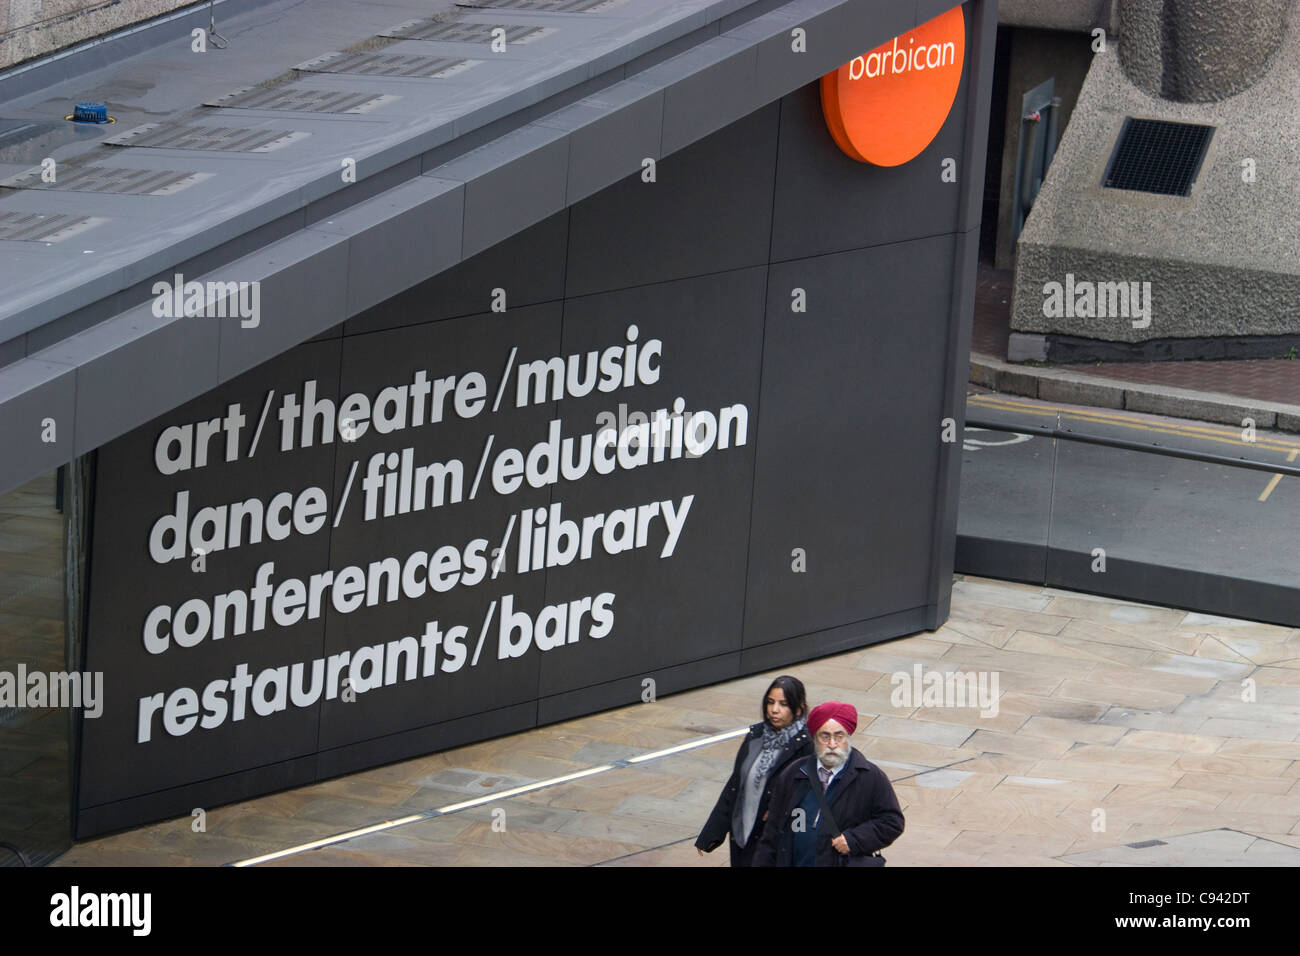 Barbican arts centre entrance london UK Stock Photo